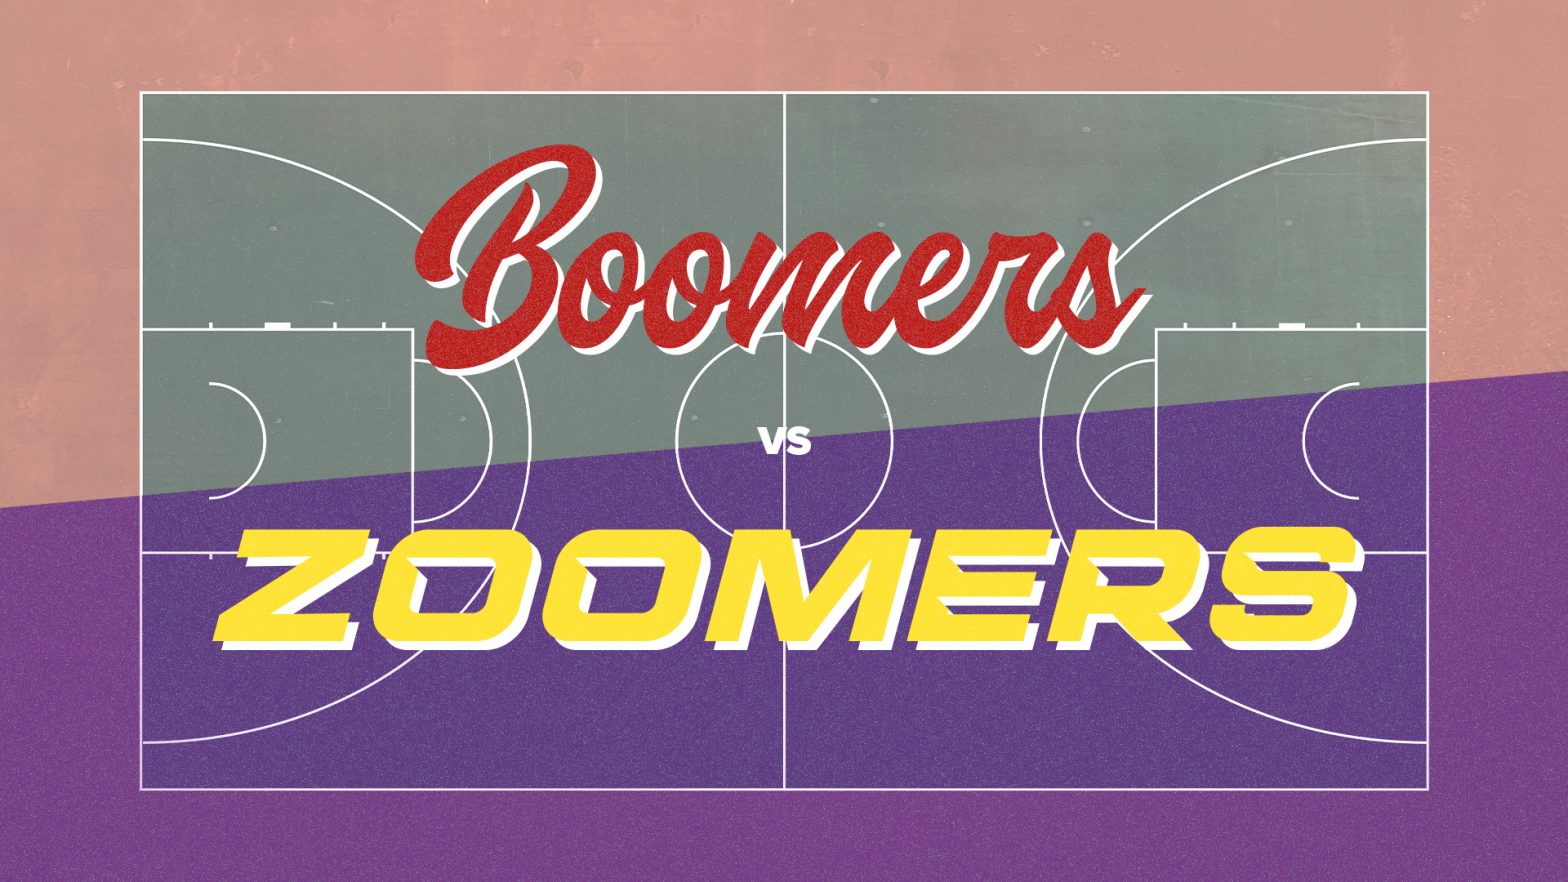 Zoomers vs. Boomers